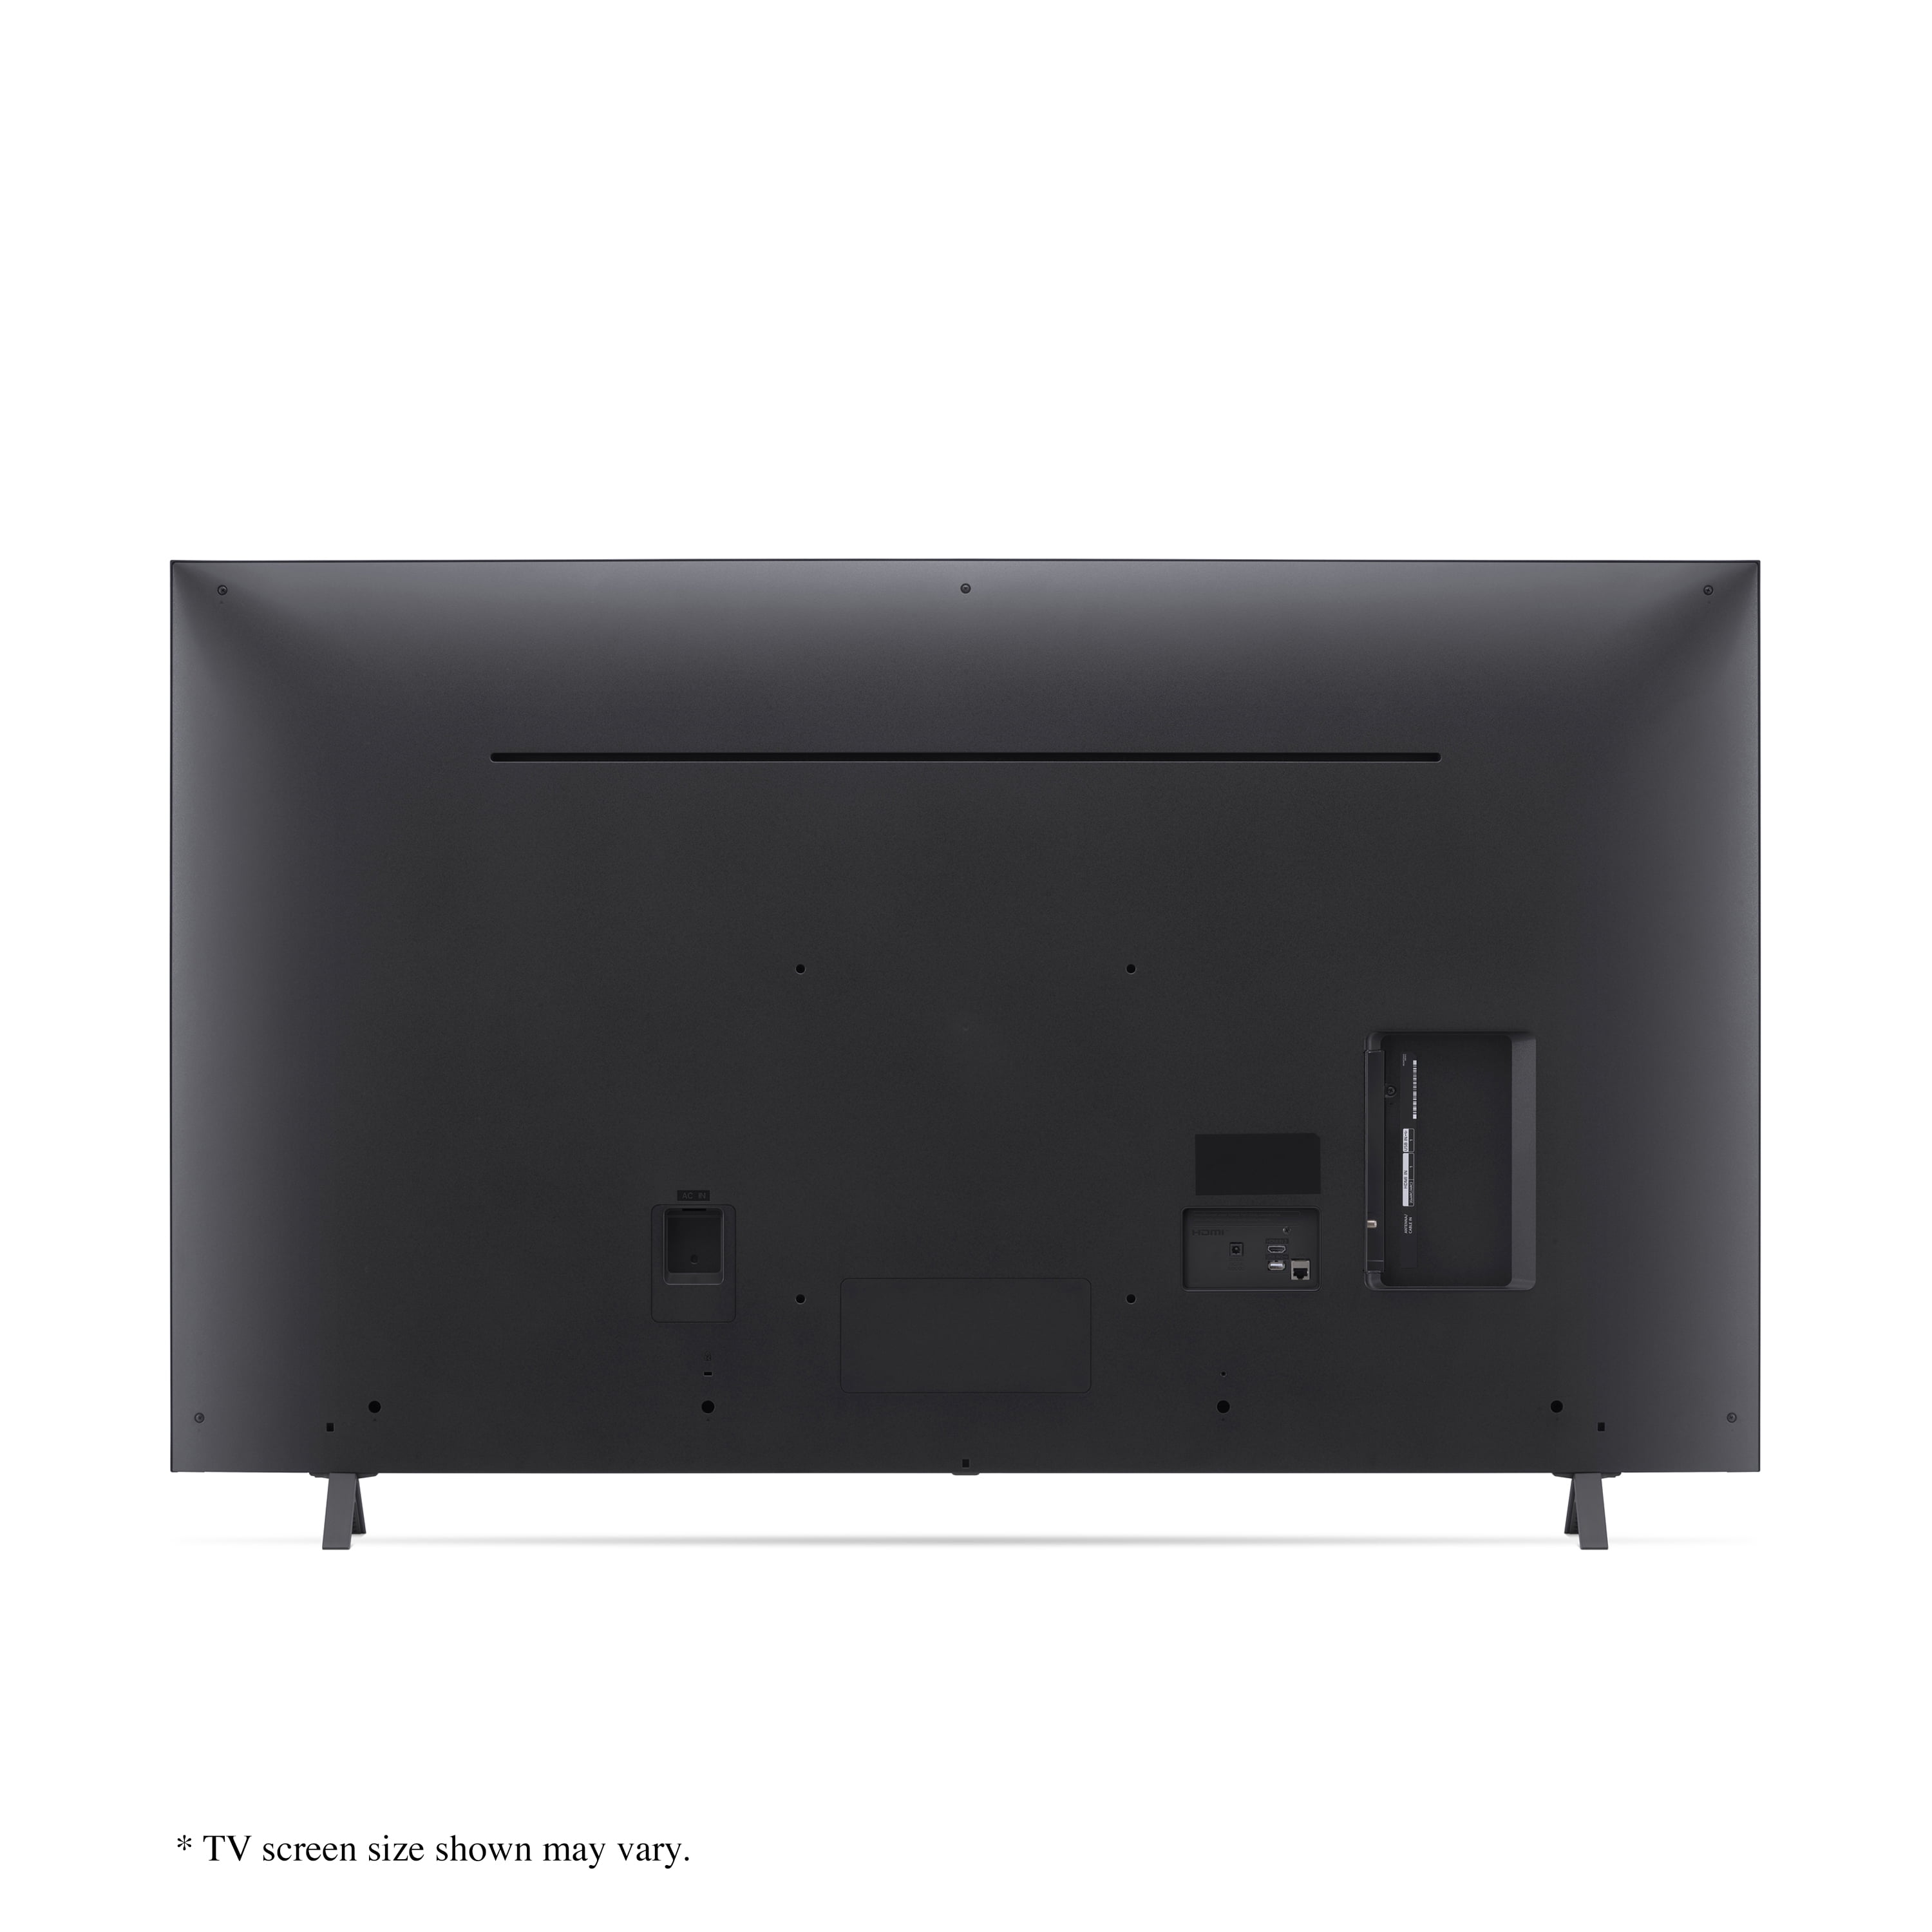 Comprar Pantalla Smart TV 4K LG UHD ThinQ™, 55 Pulgadas, Modelo